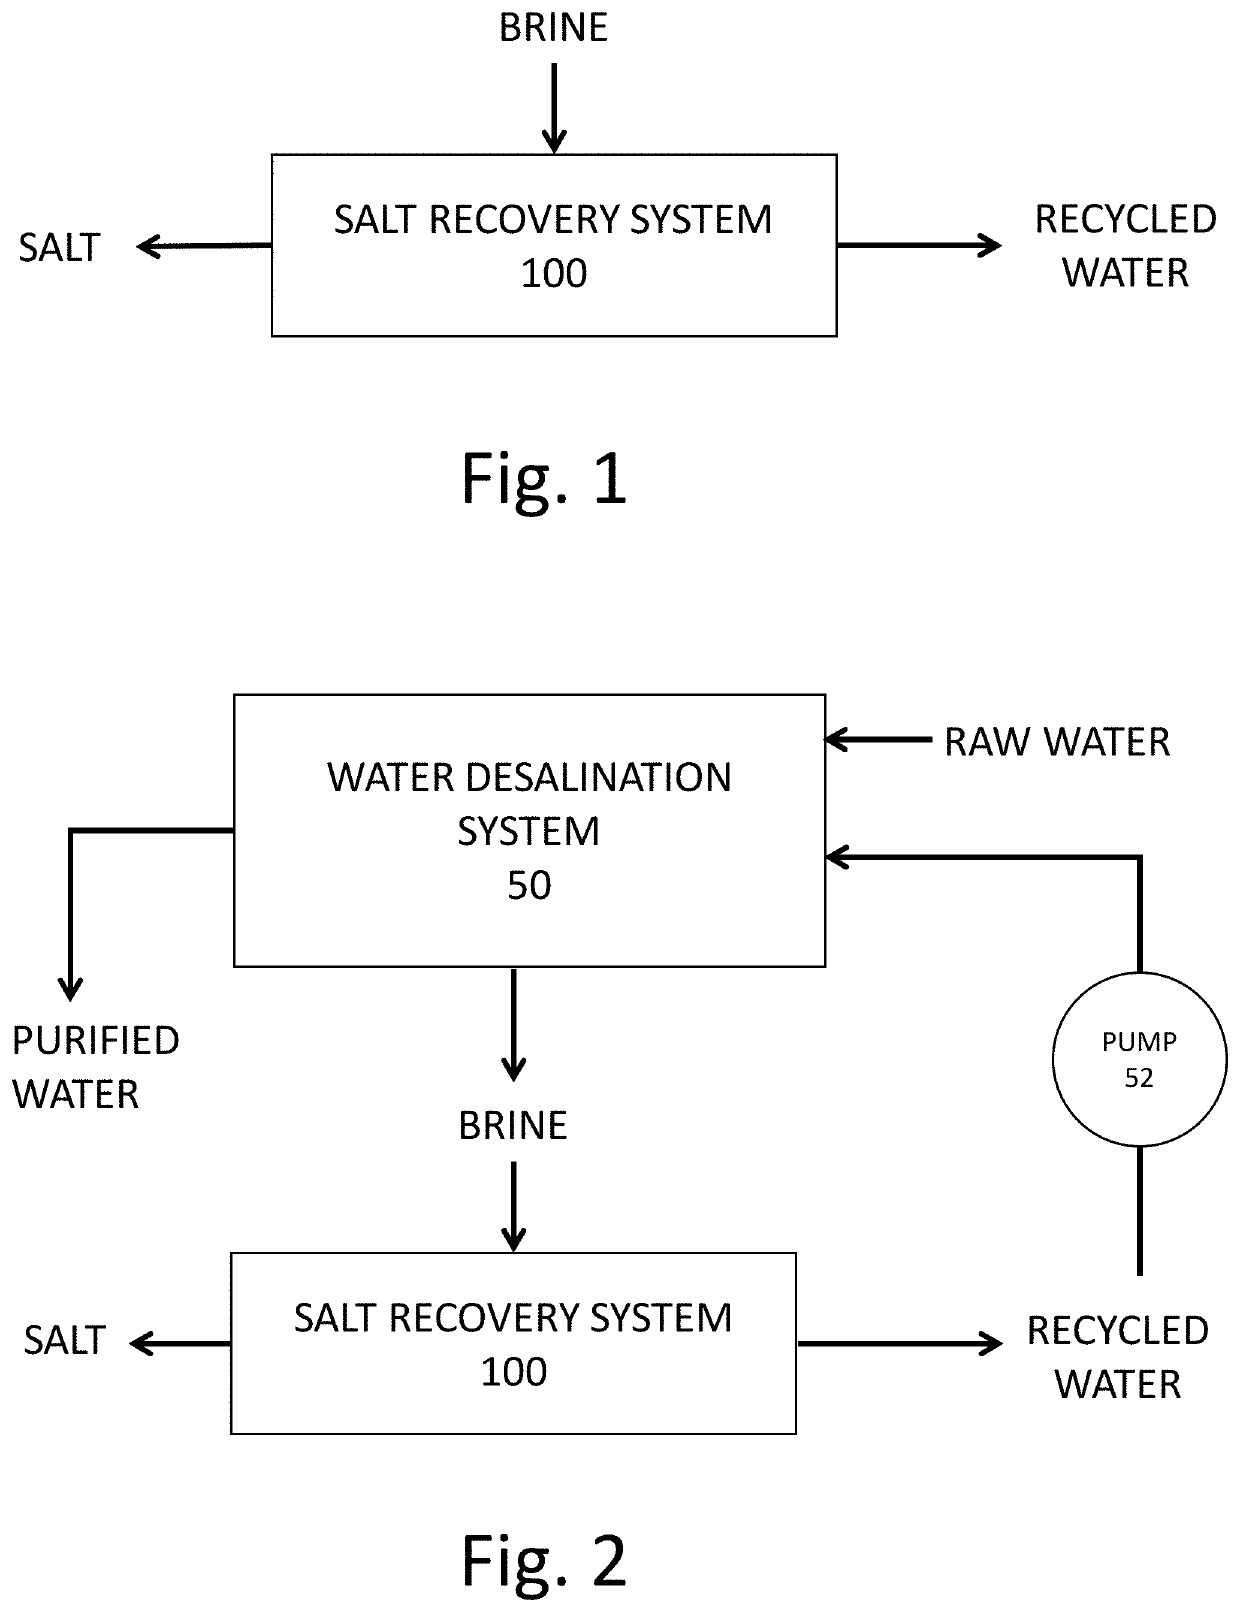 Salt recovery system